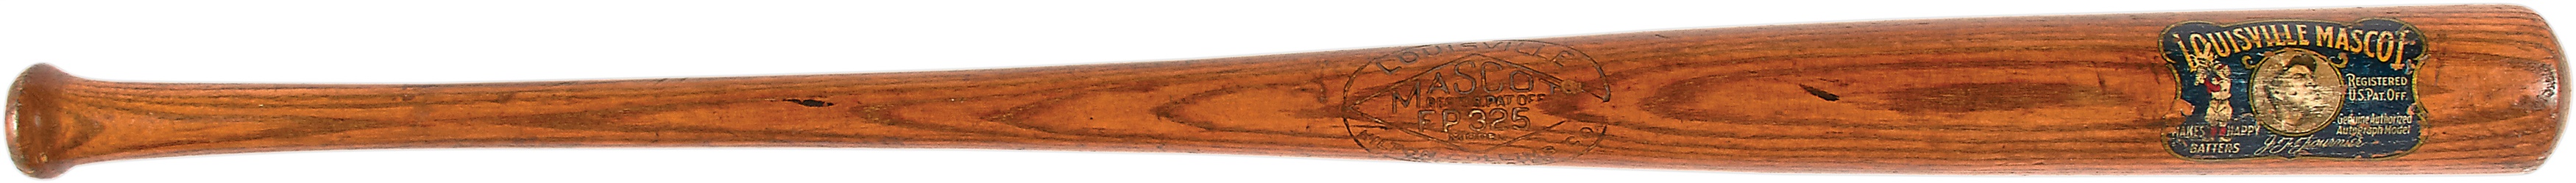 Antique Sporting Goods - Circa 1920 Jack Fournier Decal Bat